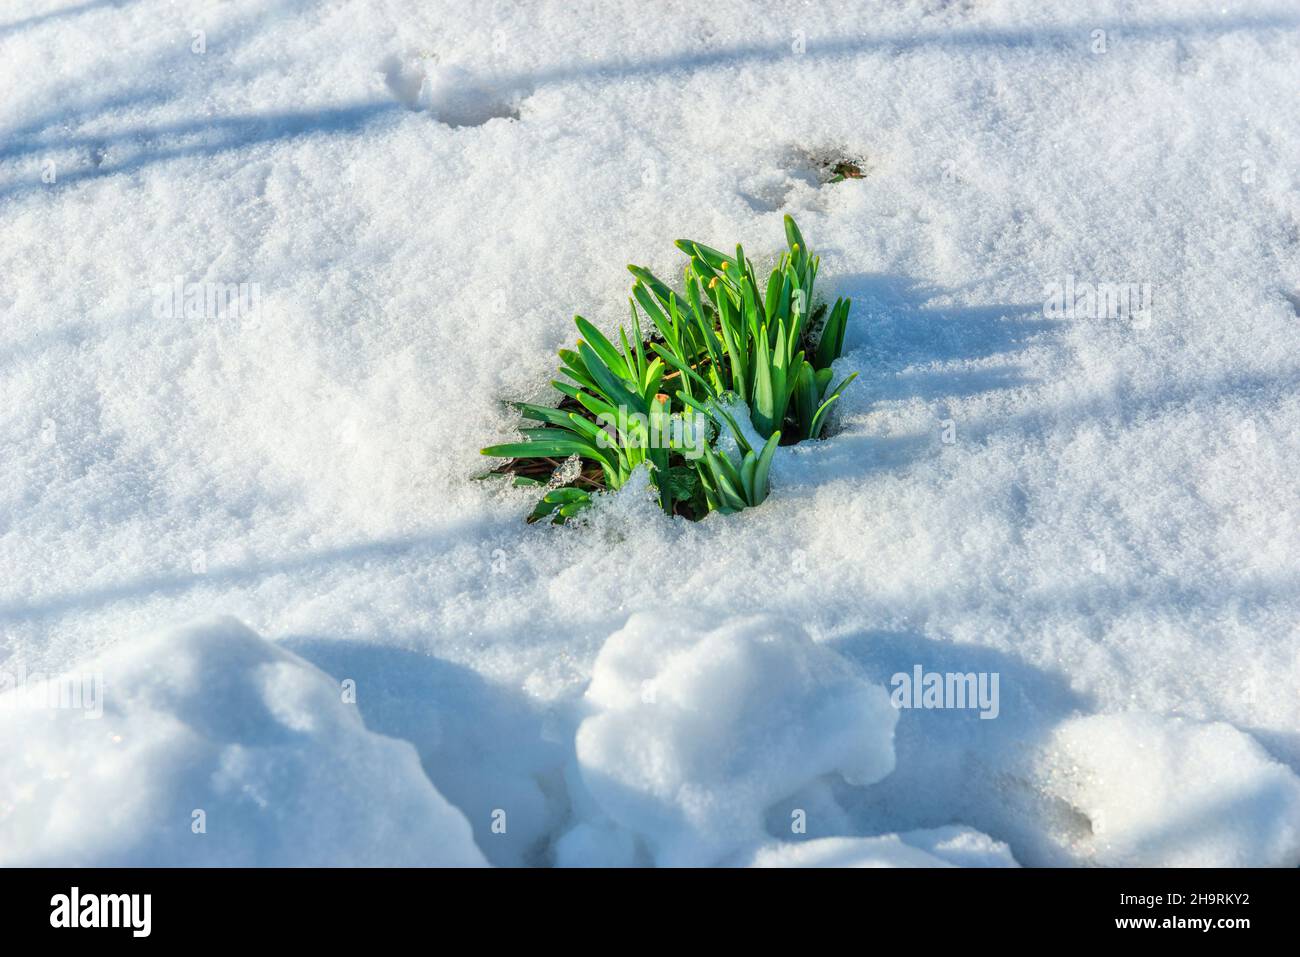 narcisi di fiori di pianta su neve scongelata Foto Stock